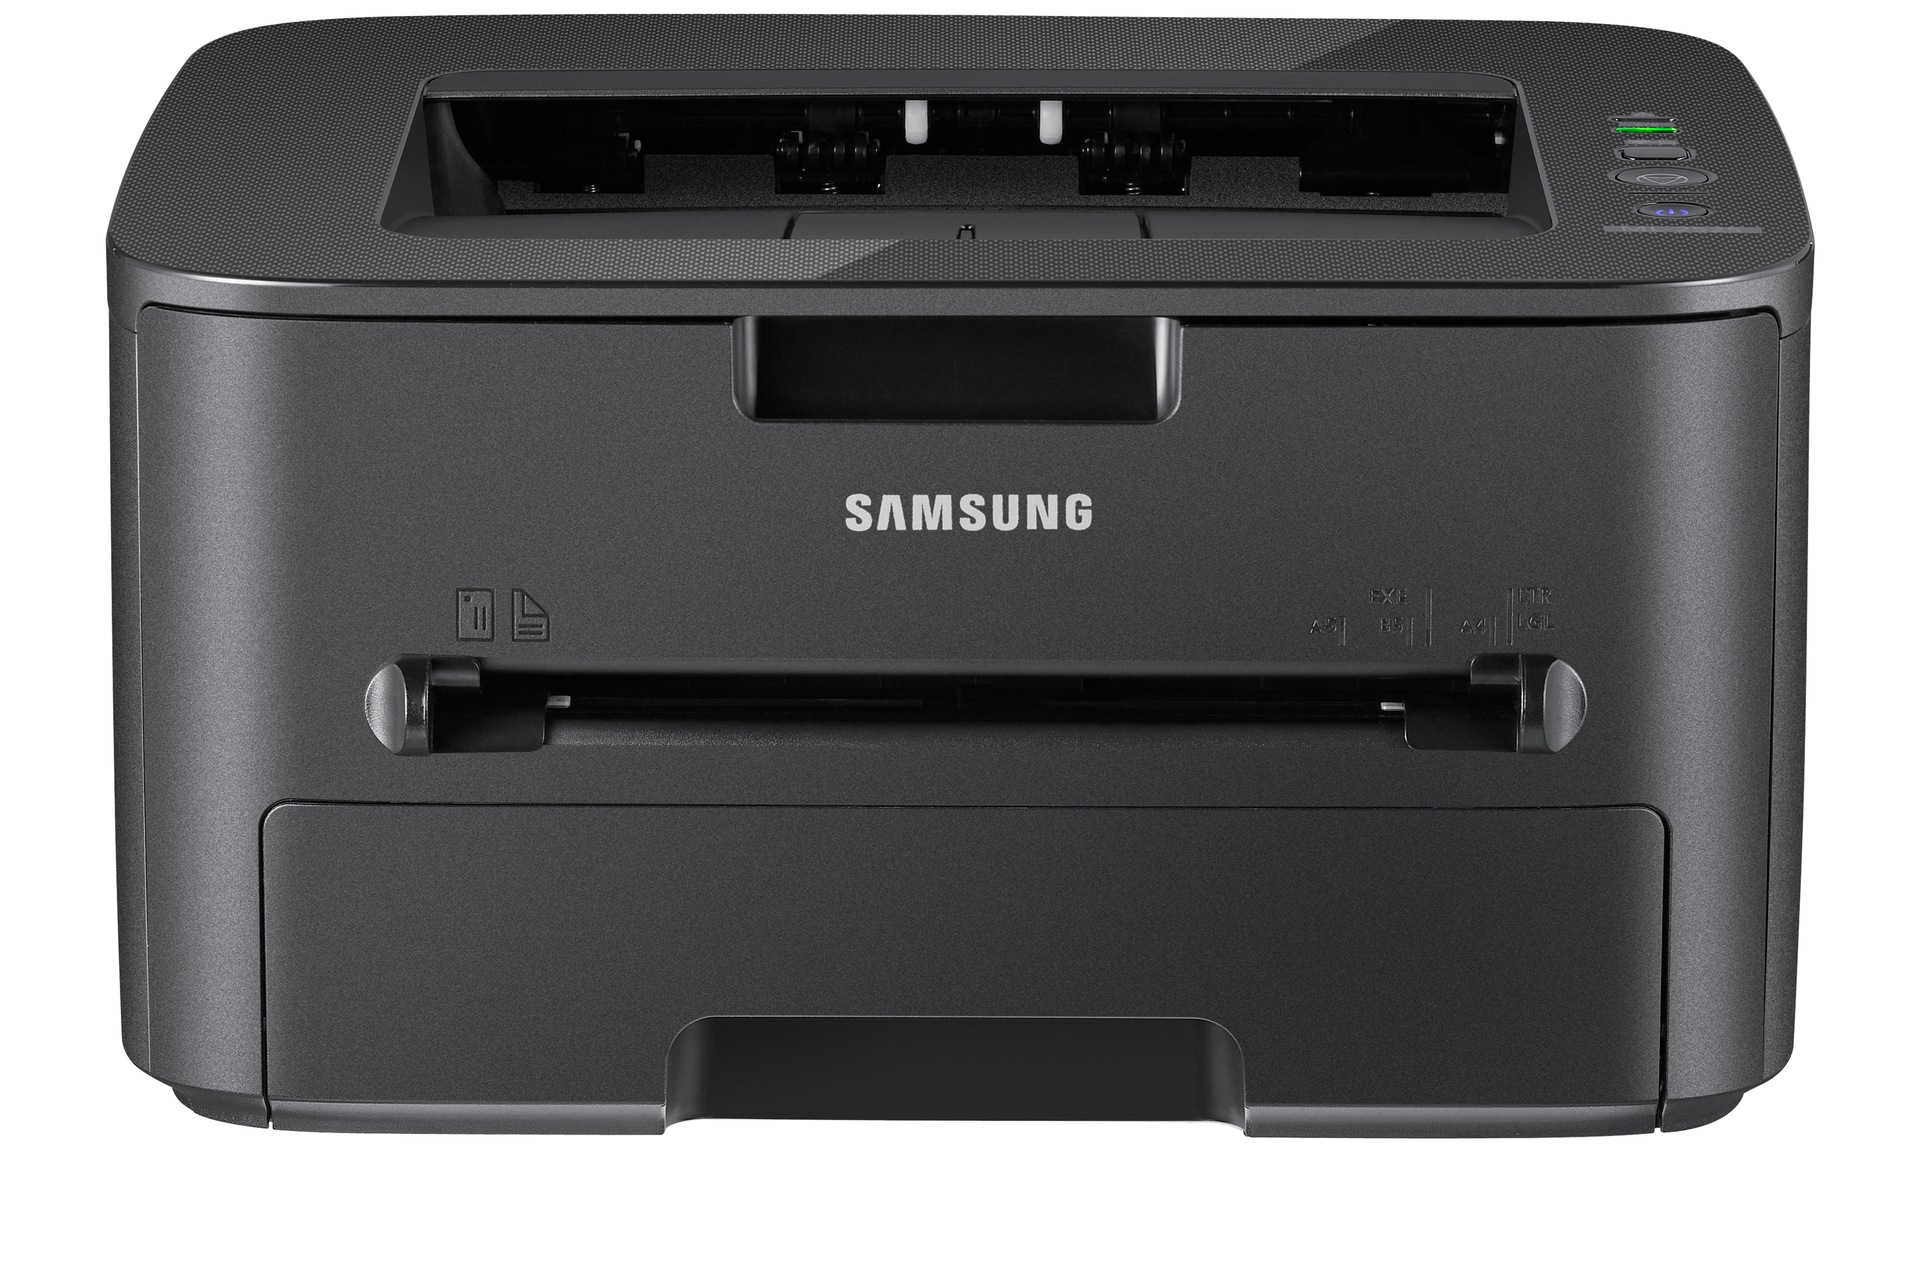    Mono Laser Printer on Ml 2525 48ppm Mono Laser Printer   Overview   Samsung